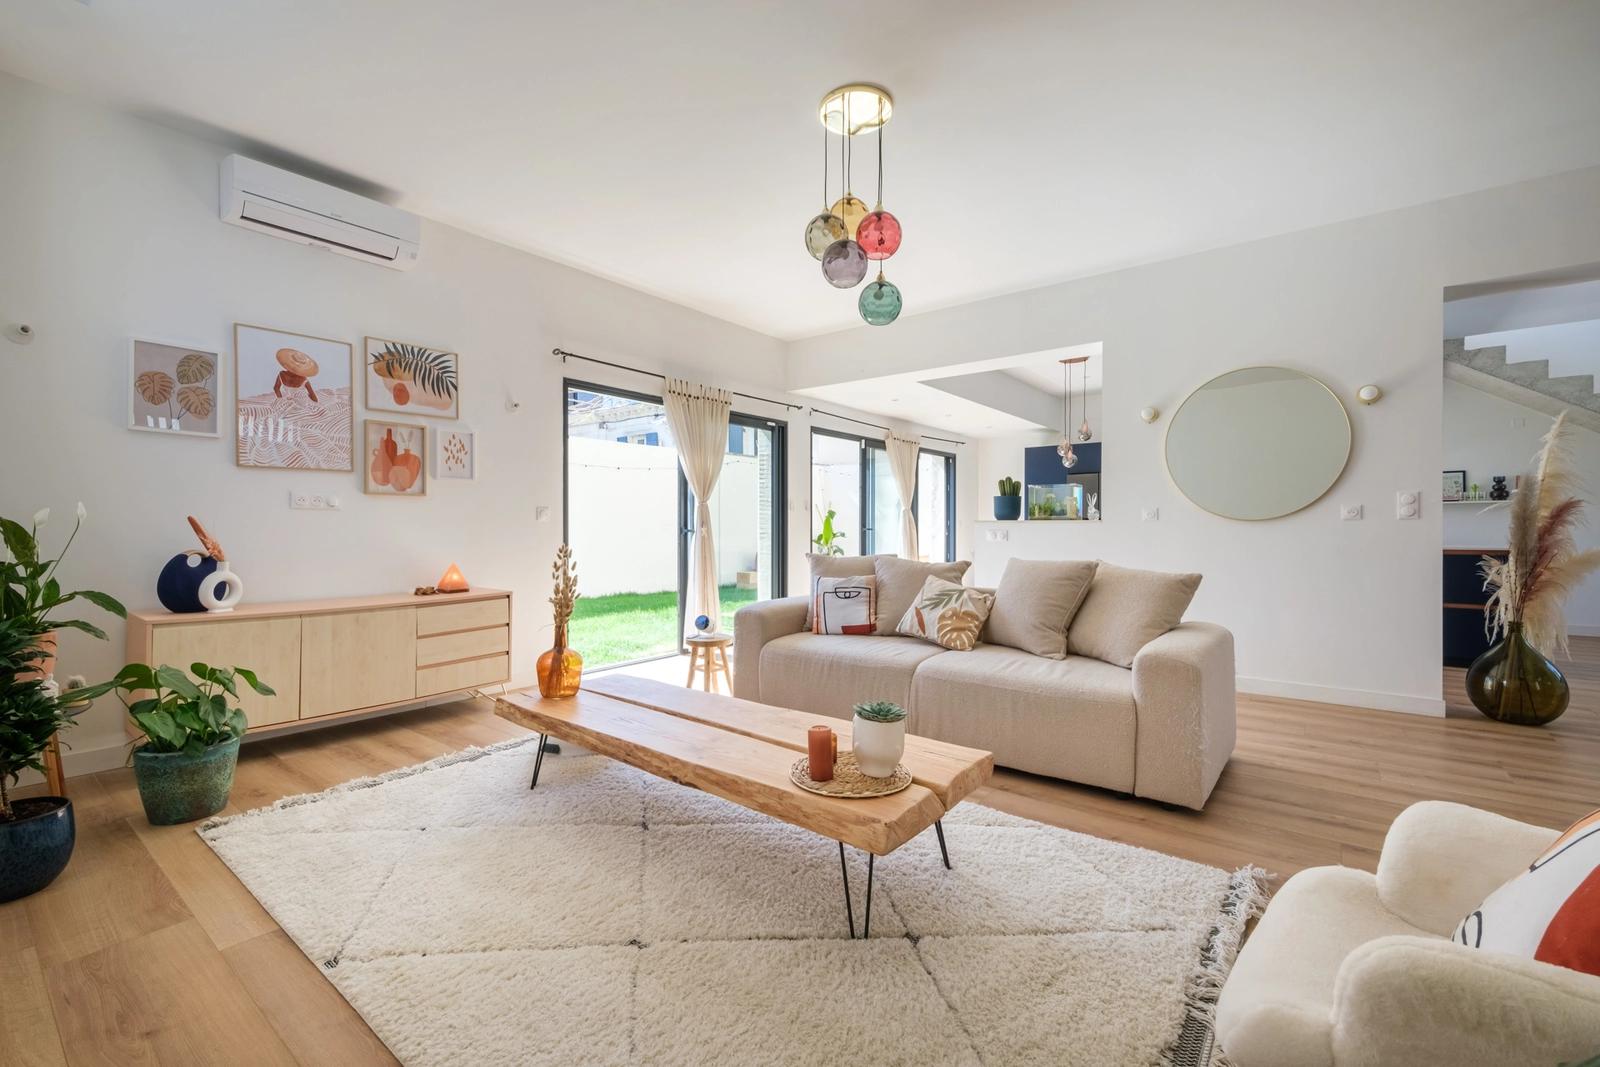 Living room in Maison productive: Light, inspiration, comfort - 0